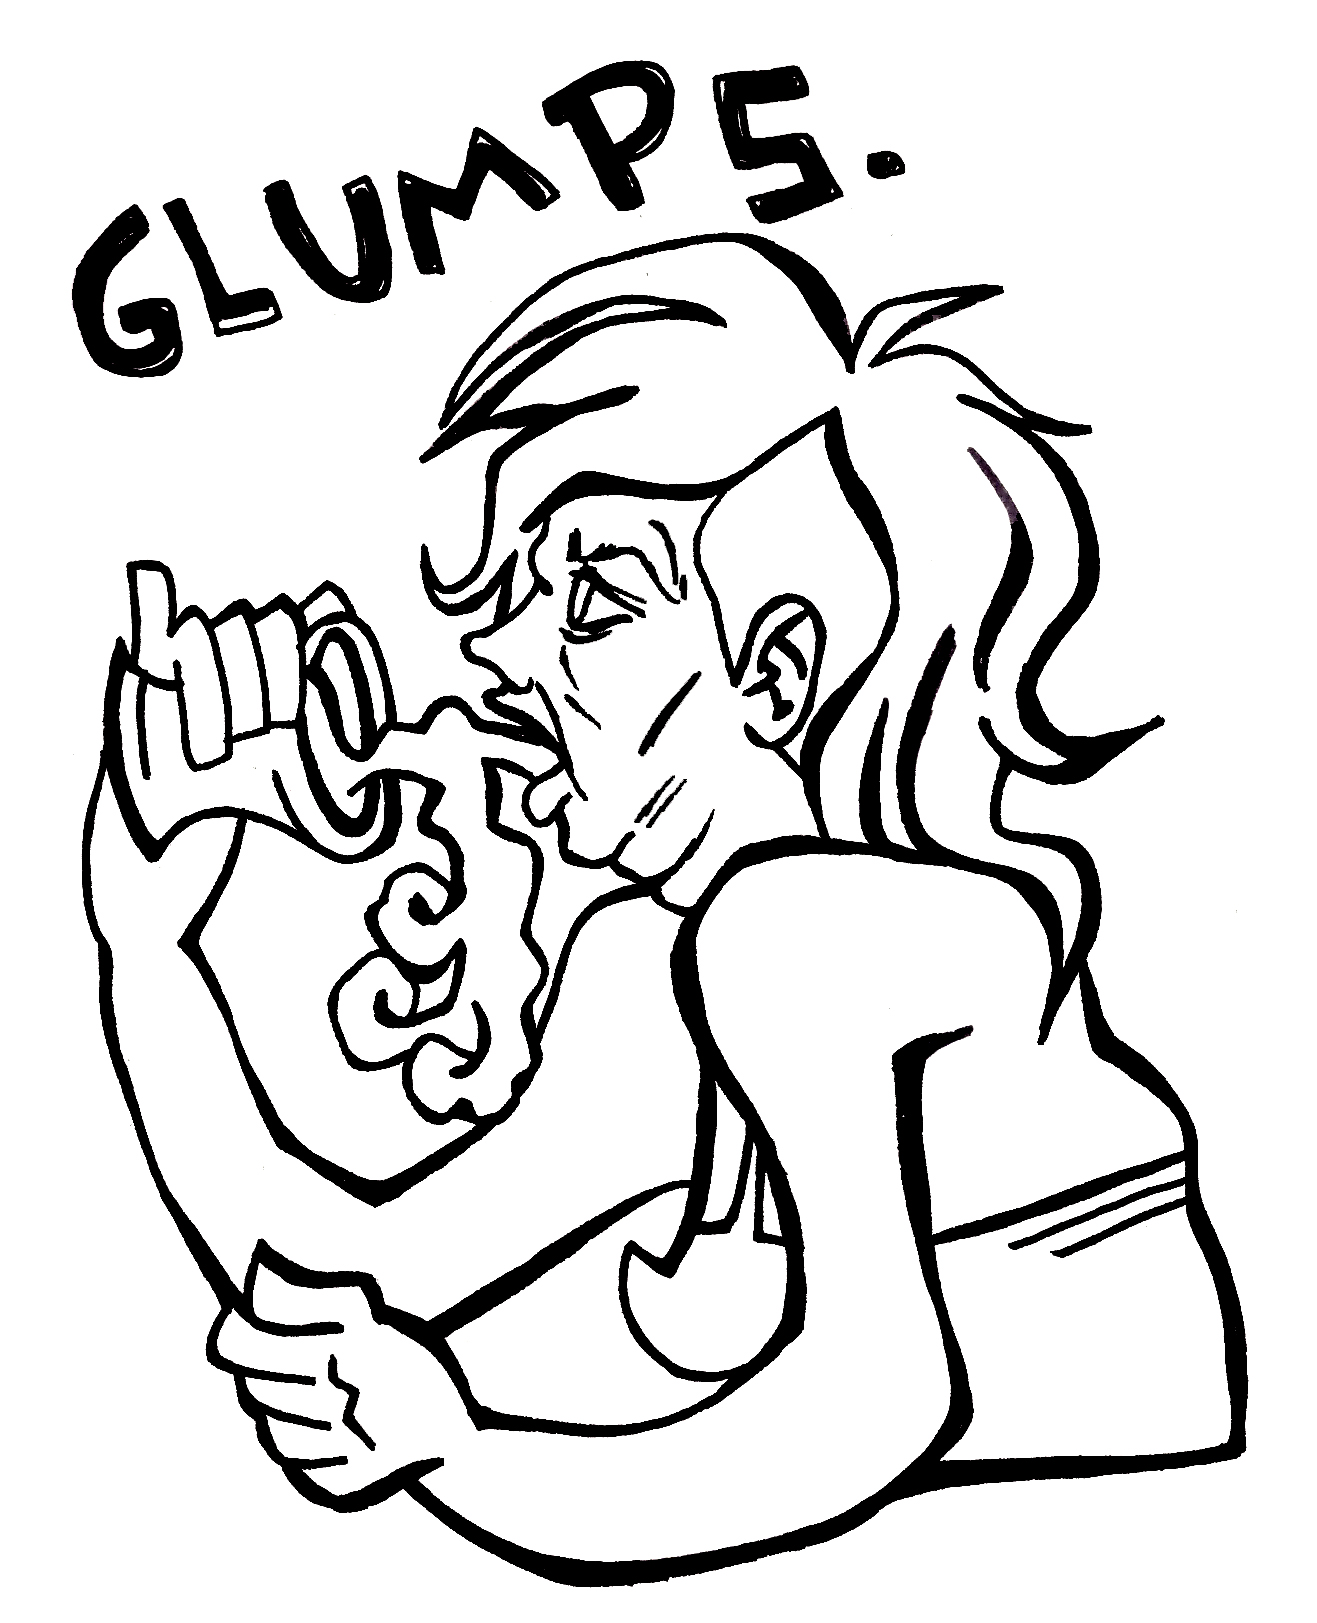 glumbs